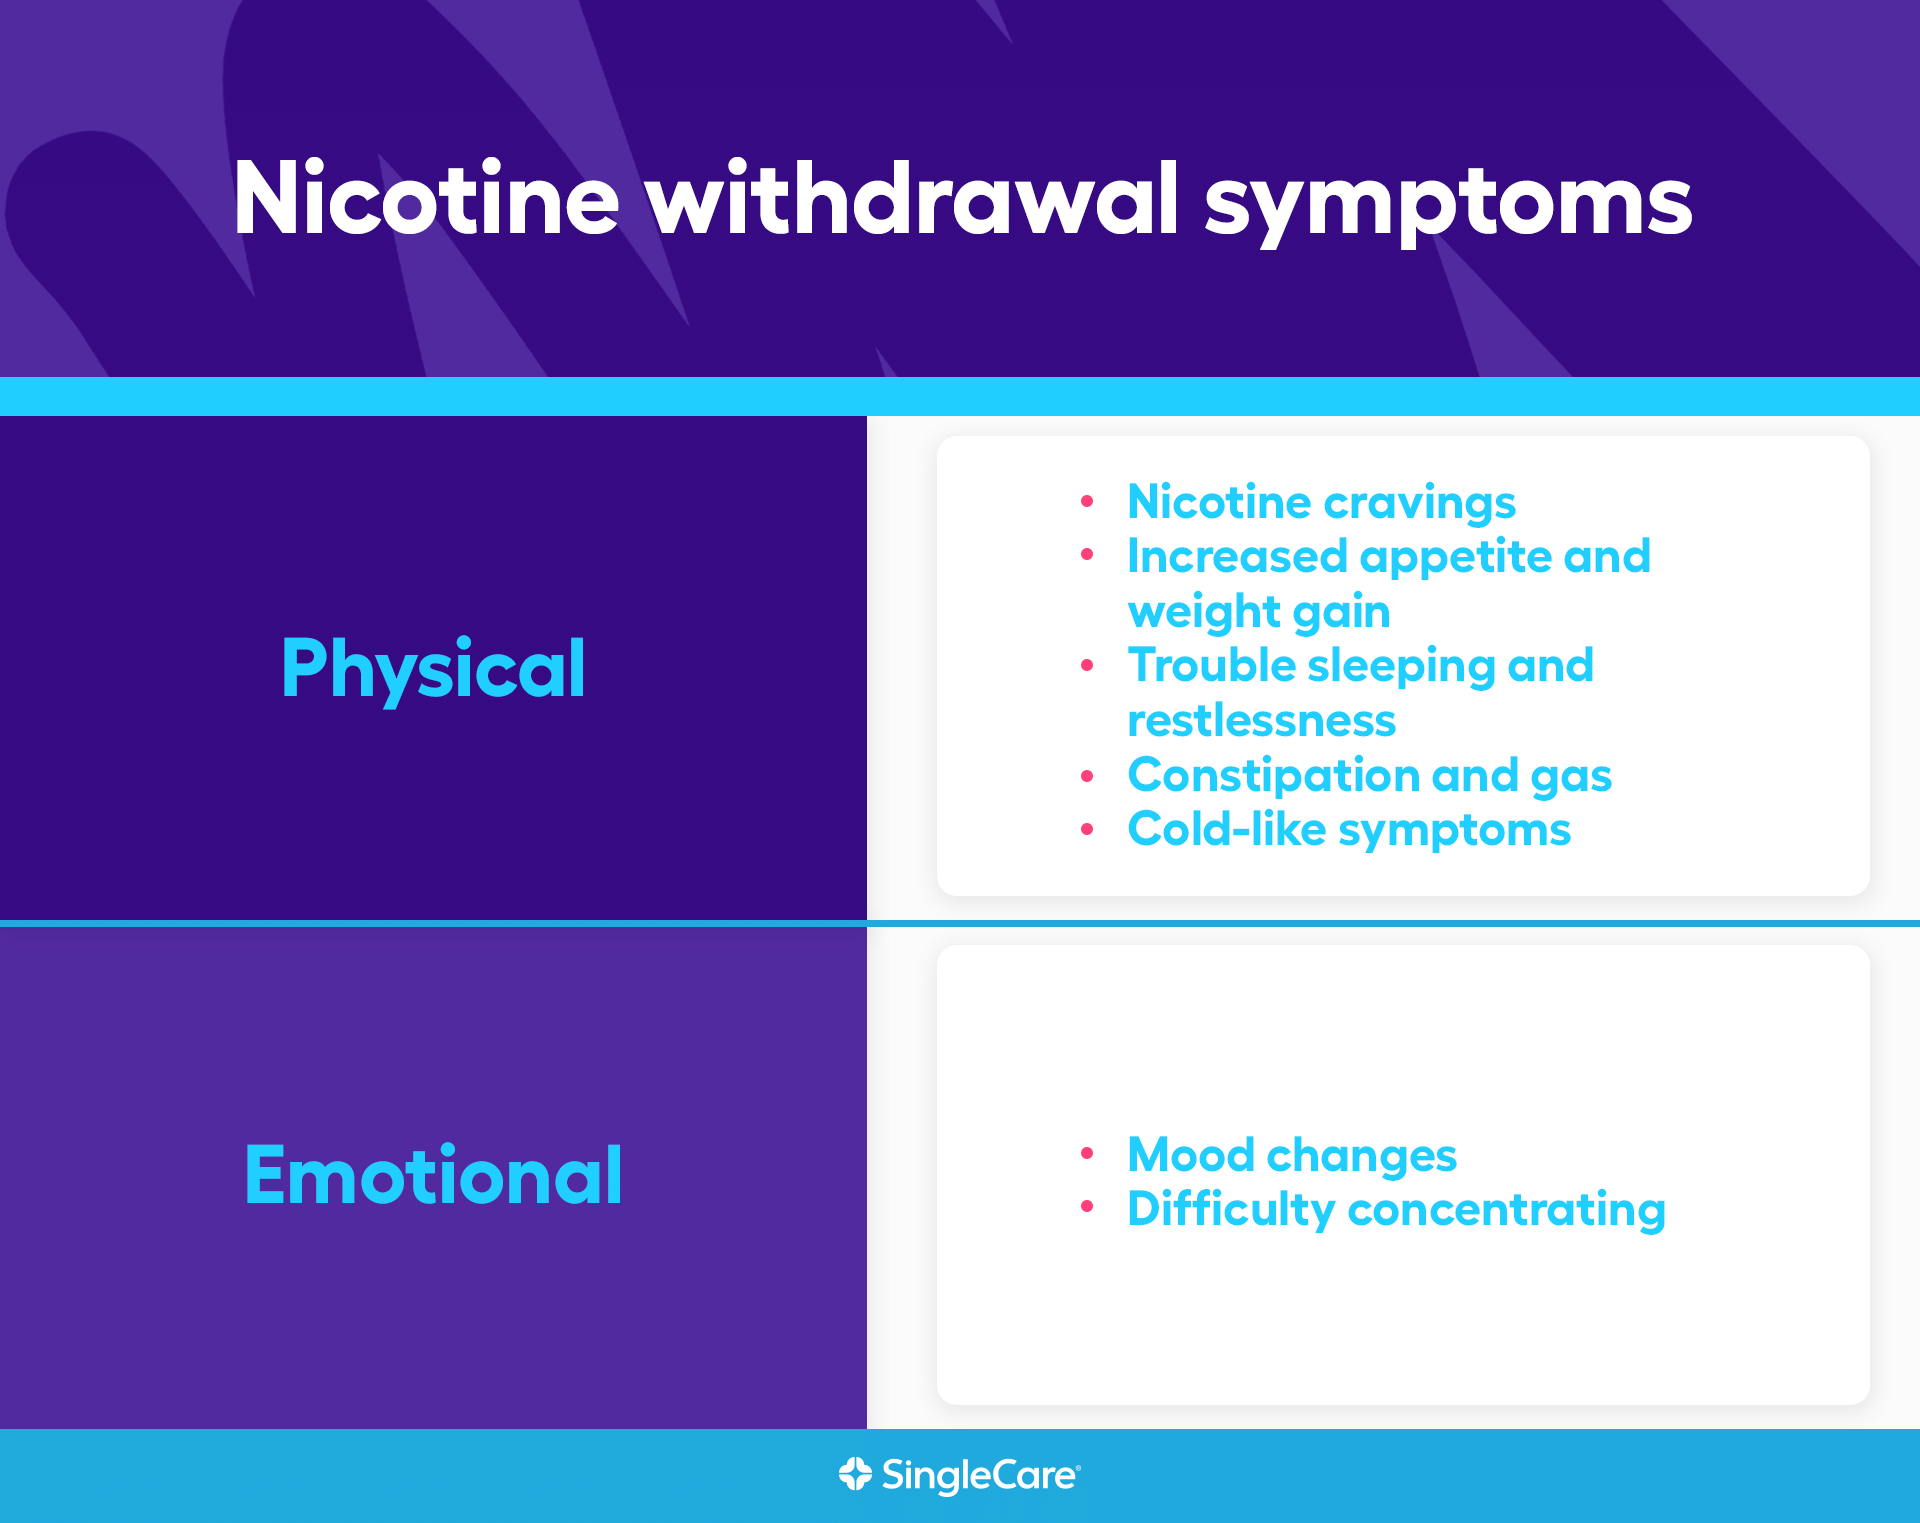 Common nicotine withdrawal symptoms